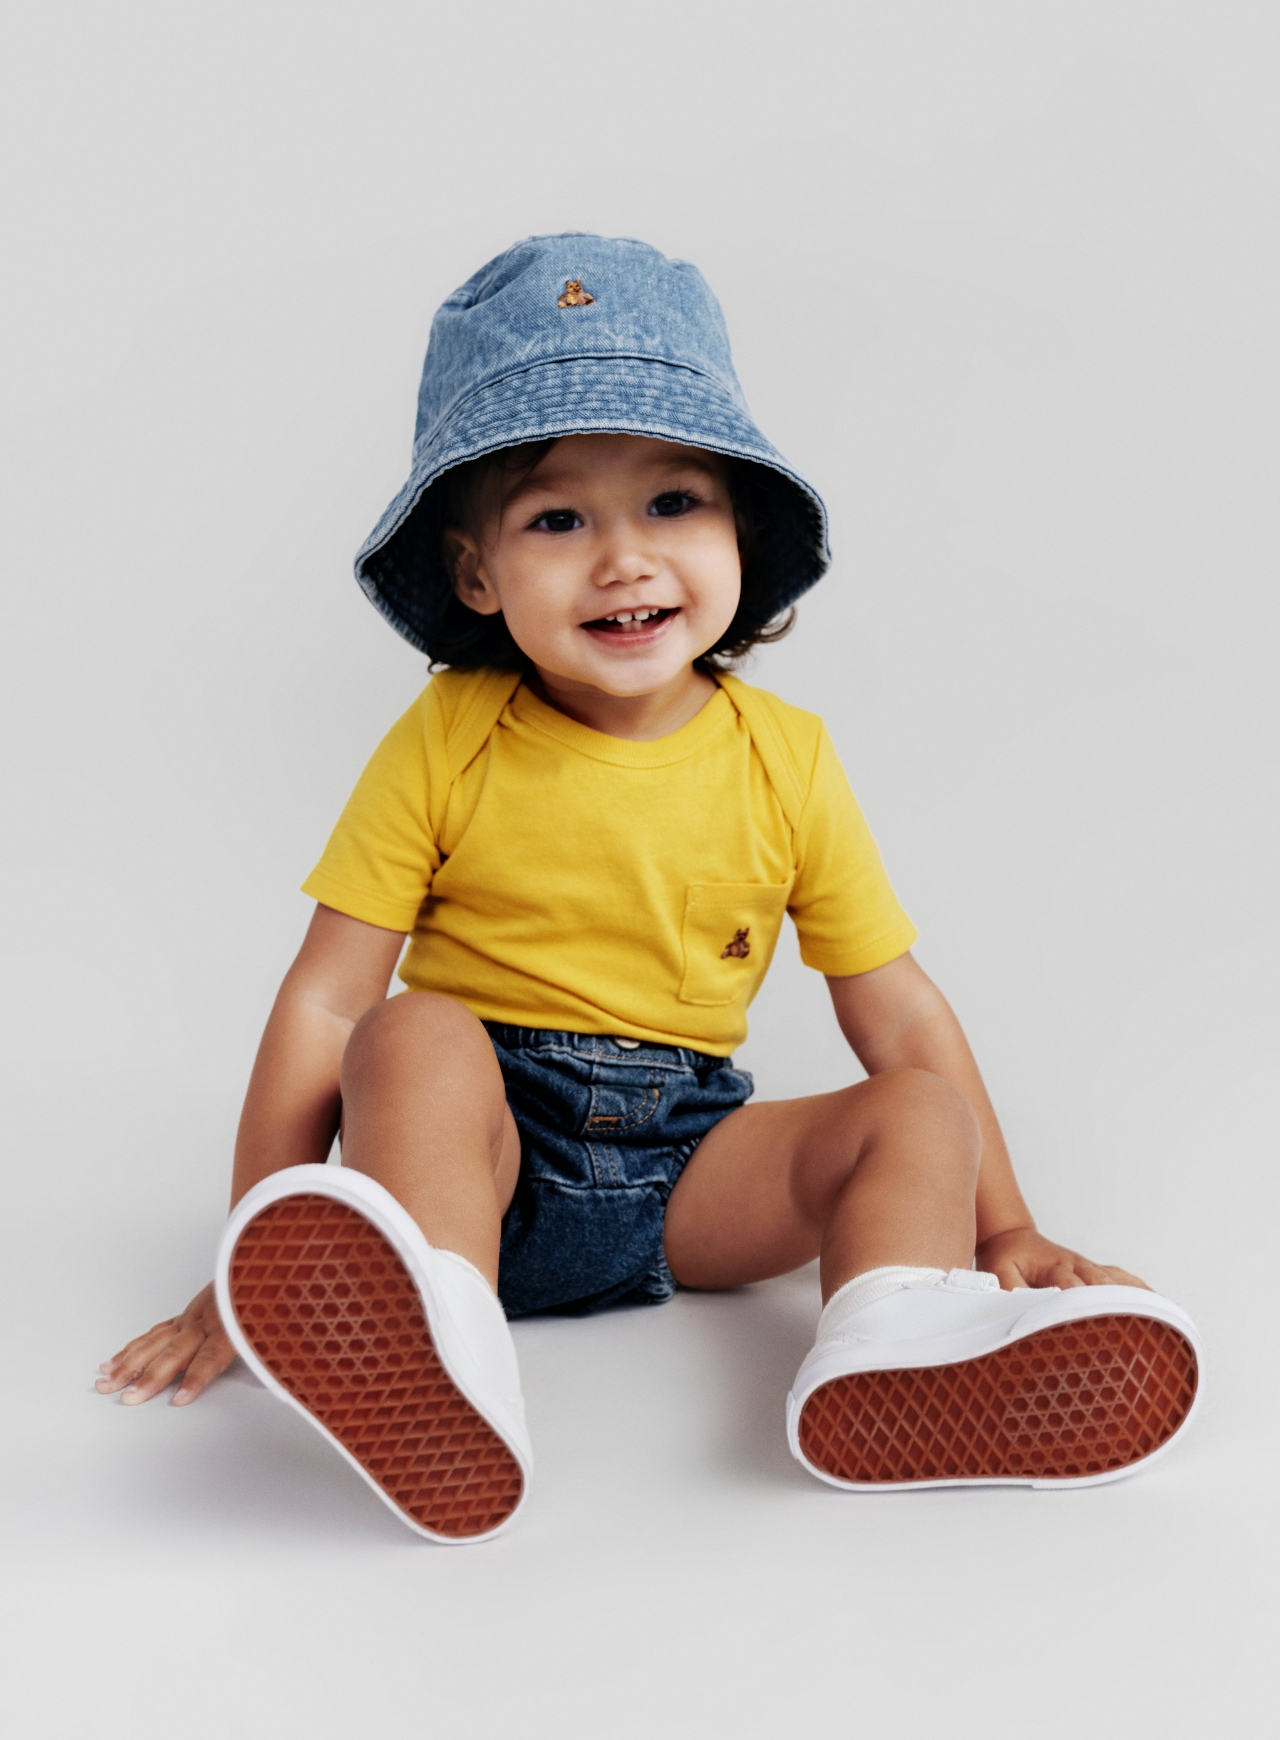 Shop Baby Girl & Baby Boy Clothes  Newborn Through Toddler Styles